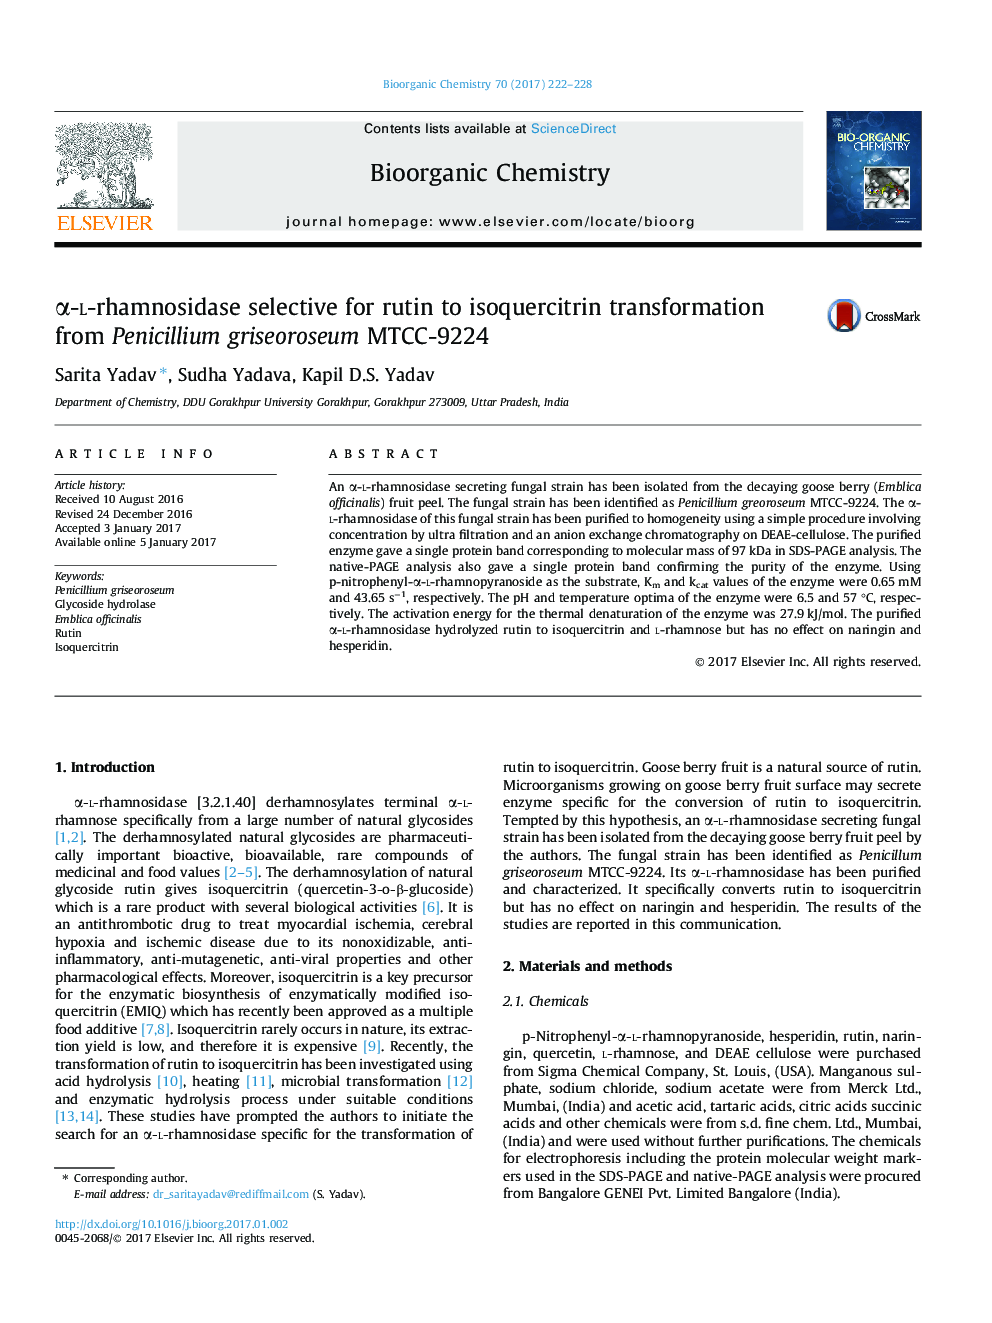 Î±-l-rhamnosidase selective for rutin to isoquercitrin transformation from Penicillium griseoroseum MTCC-9224